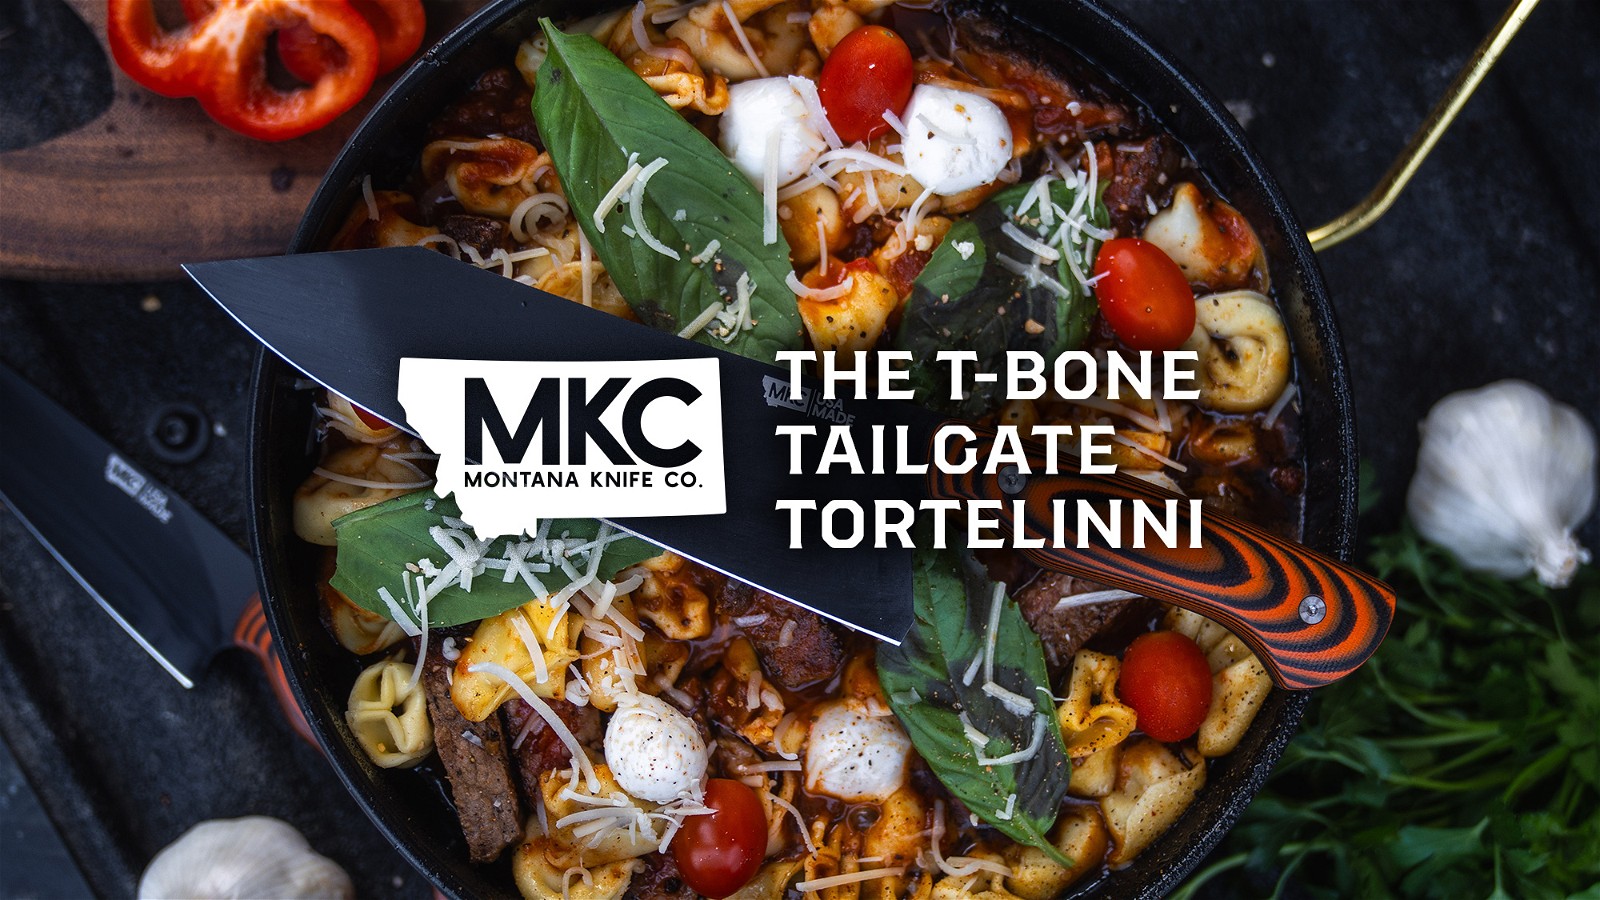 Image of Brandon’s T-Bone Tailgate Tortellini